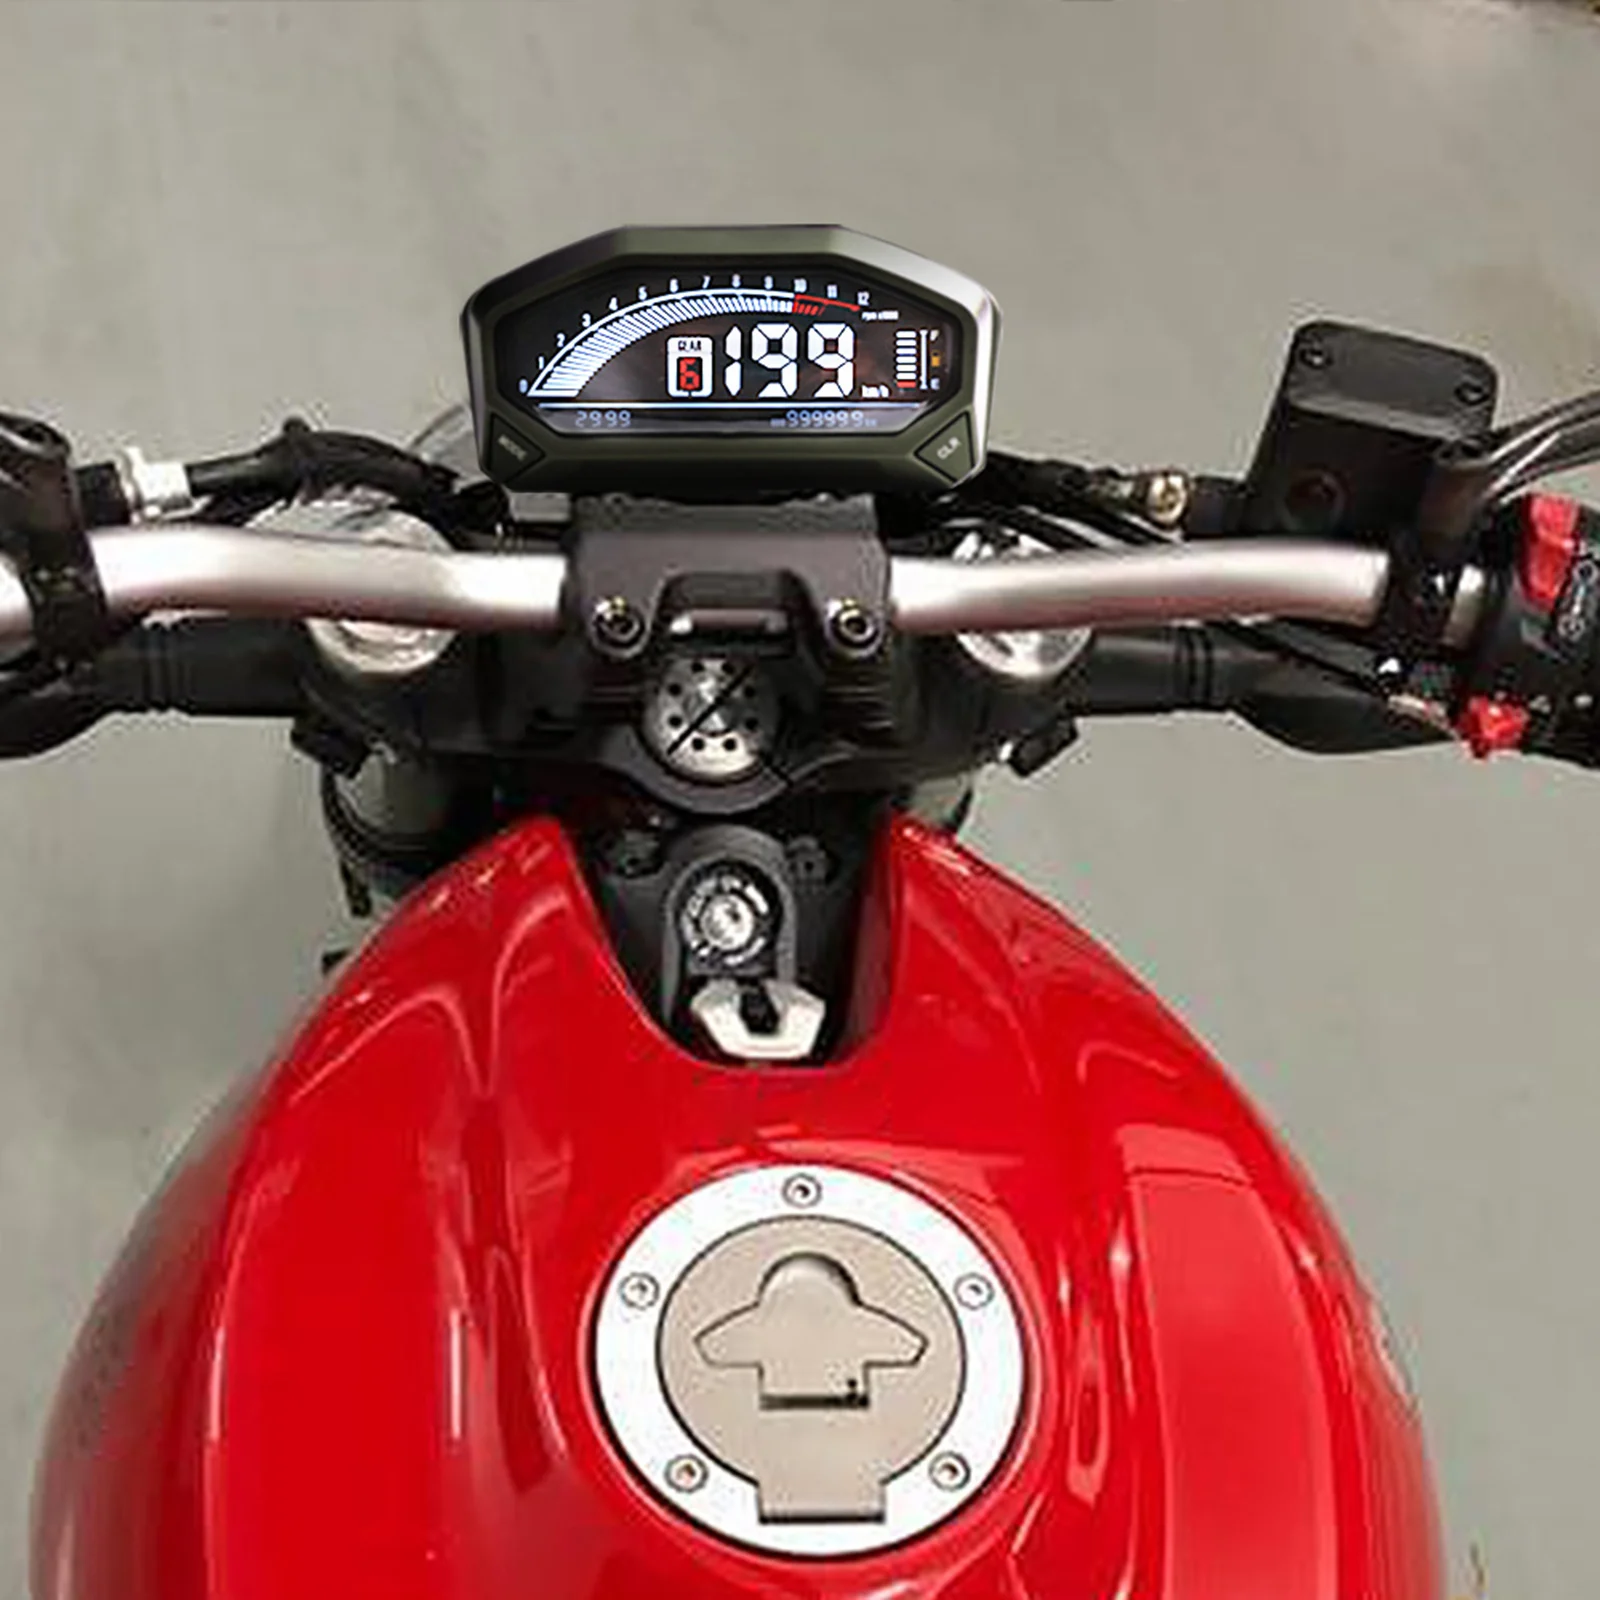 Universal Motorcycle LCD Digital Speedometer 1200 RPM 6 Gear Backlight Motorcycle Odometer For 1,2,4 Cylinders Meter